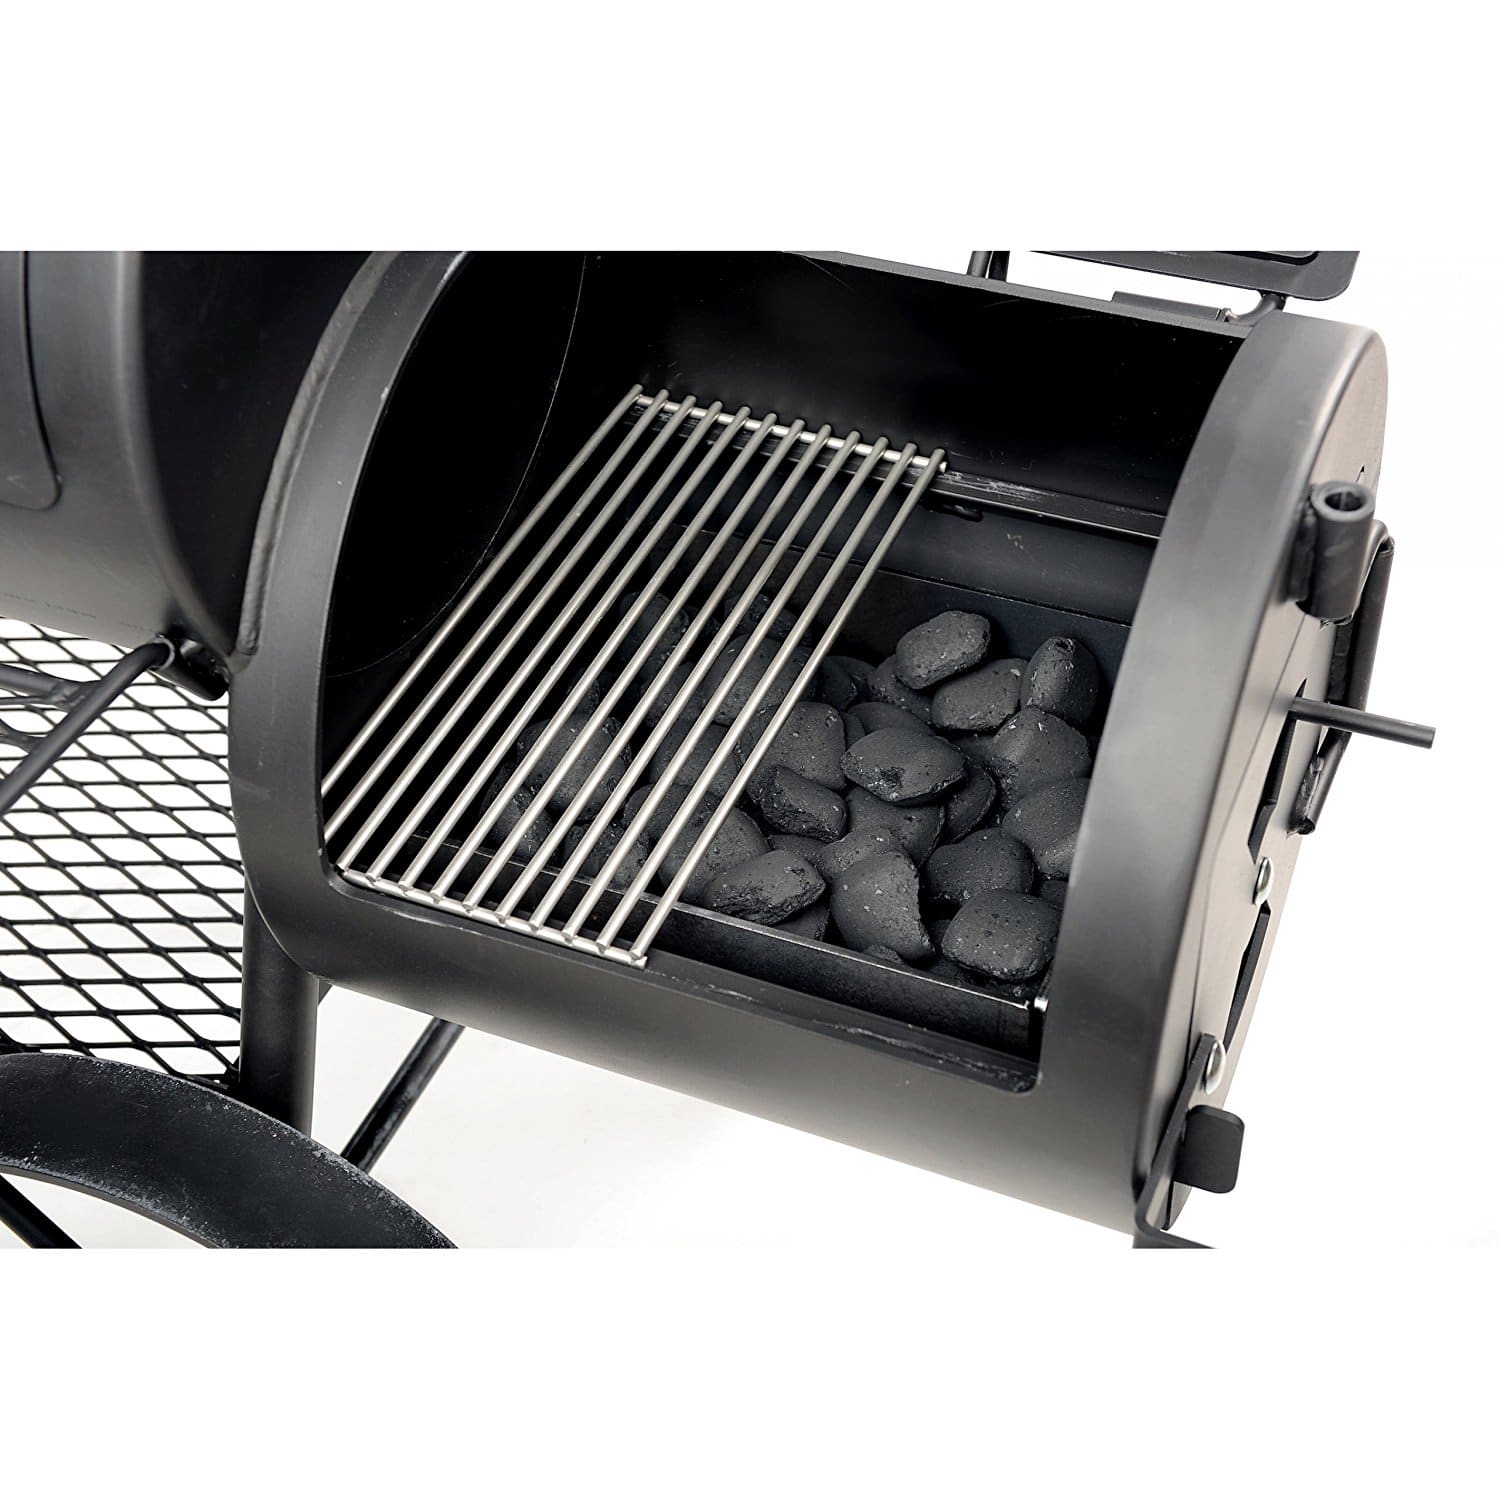 Bourgondië Verslagen beweeglijkheid Joe's Barbecue Smoker RVS grillrooster vuurbox 16 inch - MultiFlame